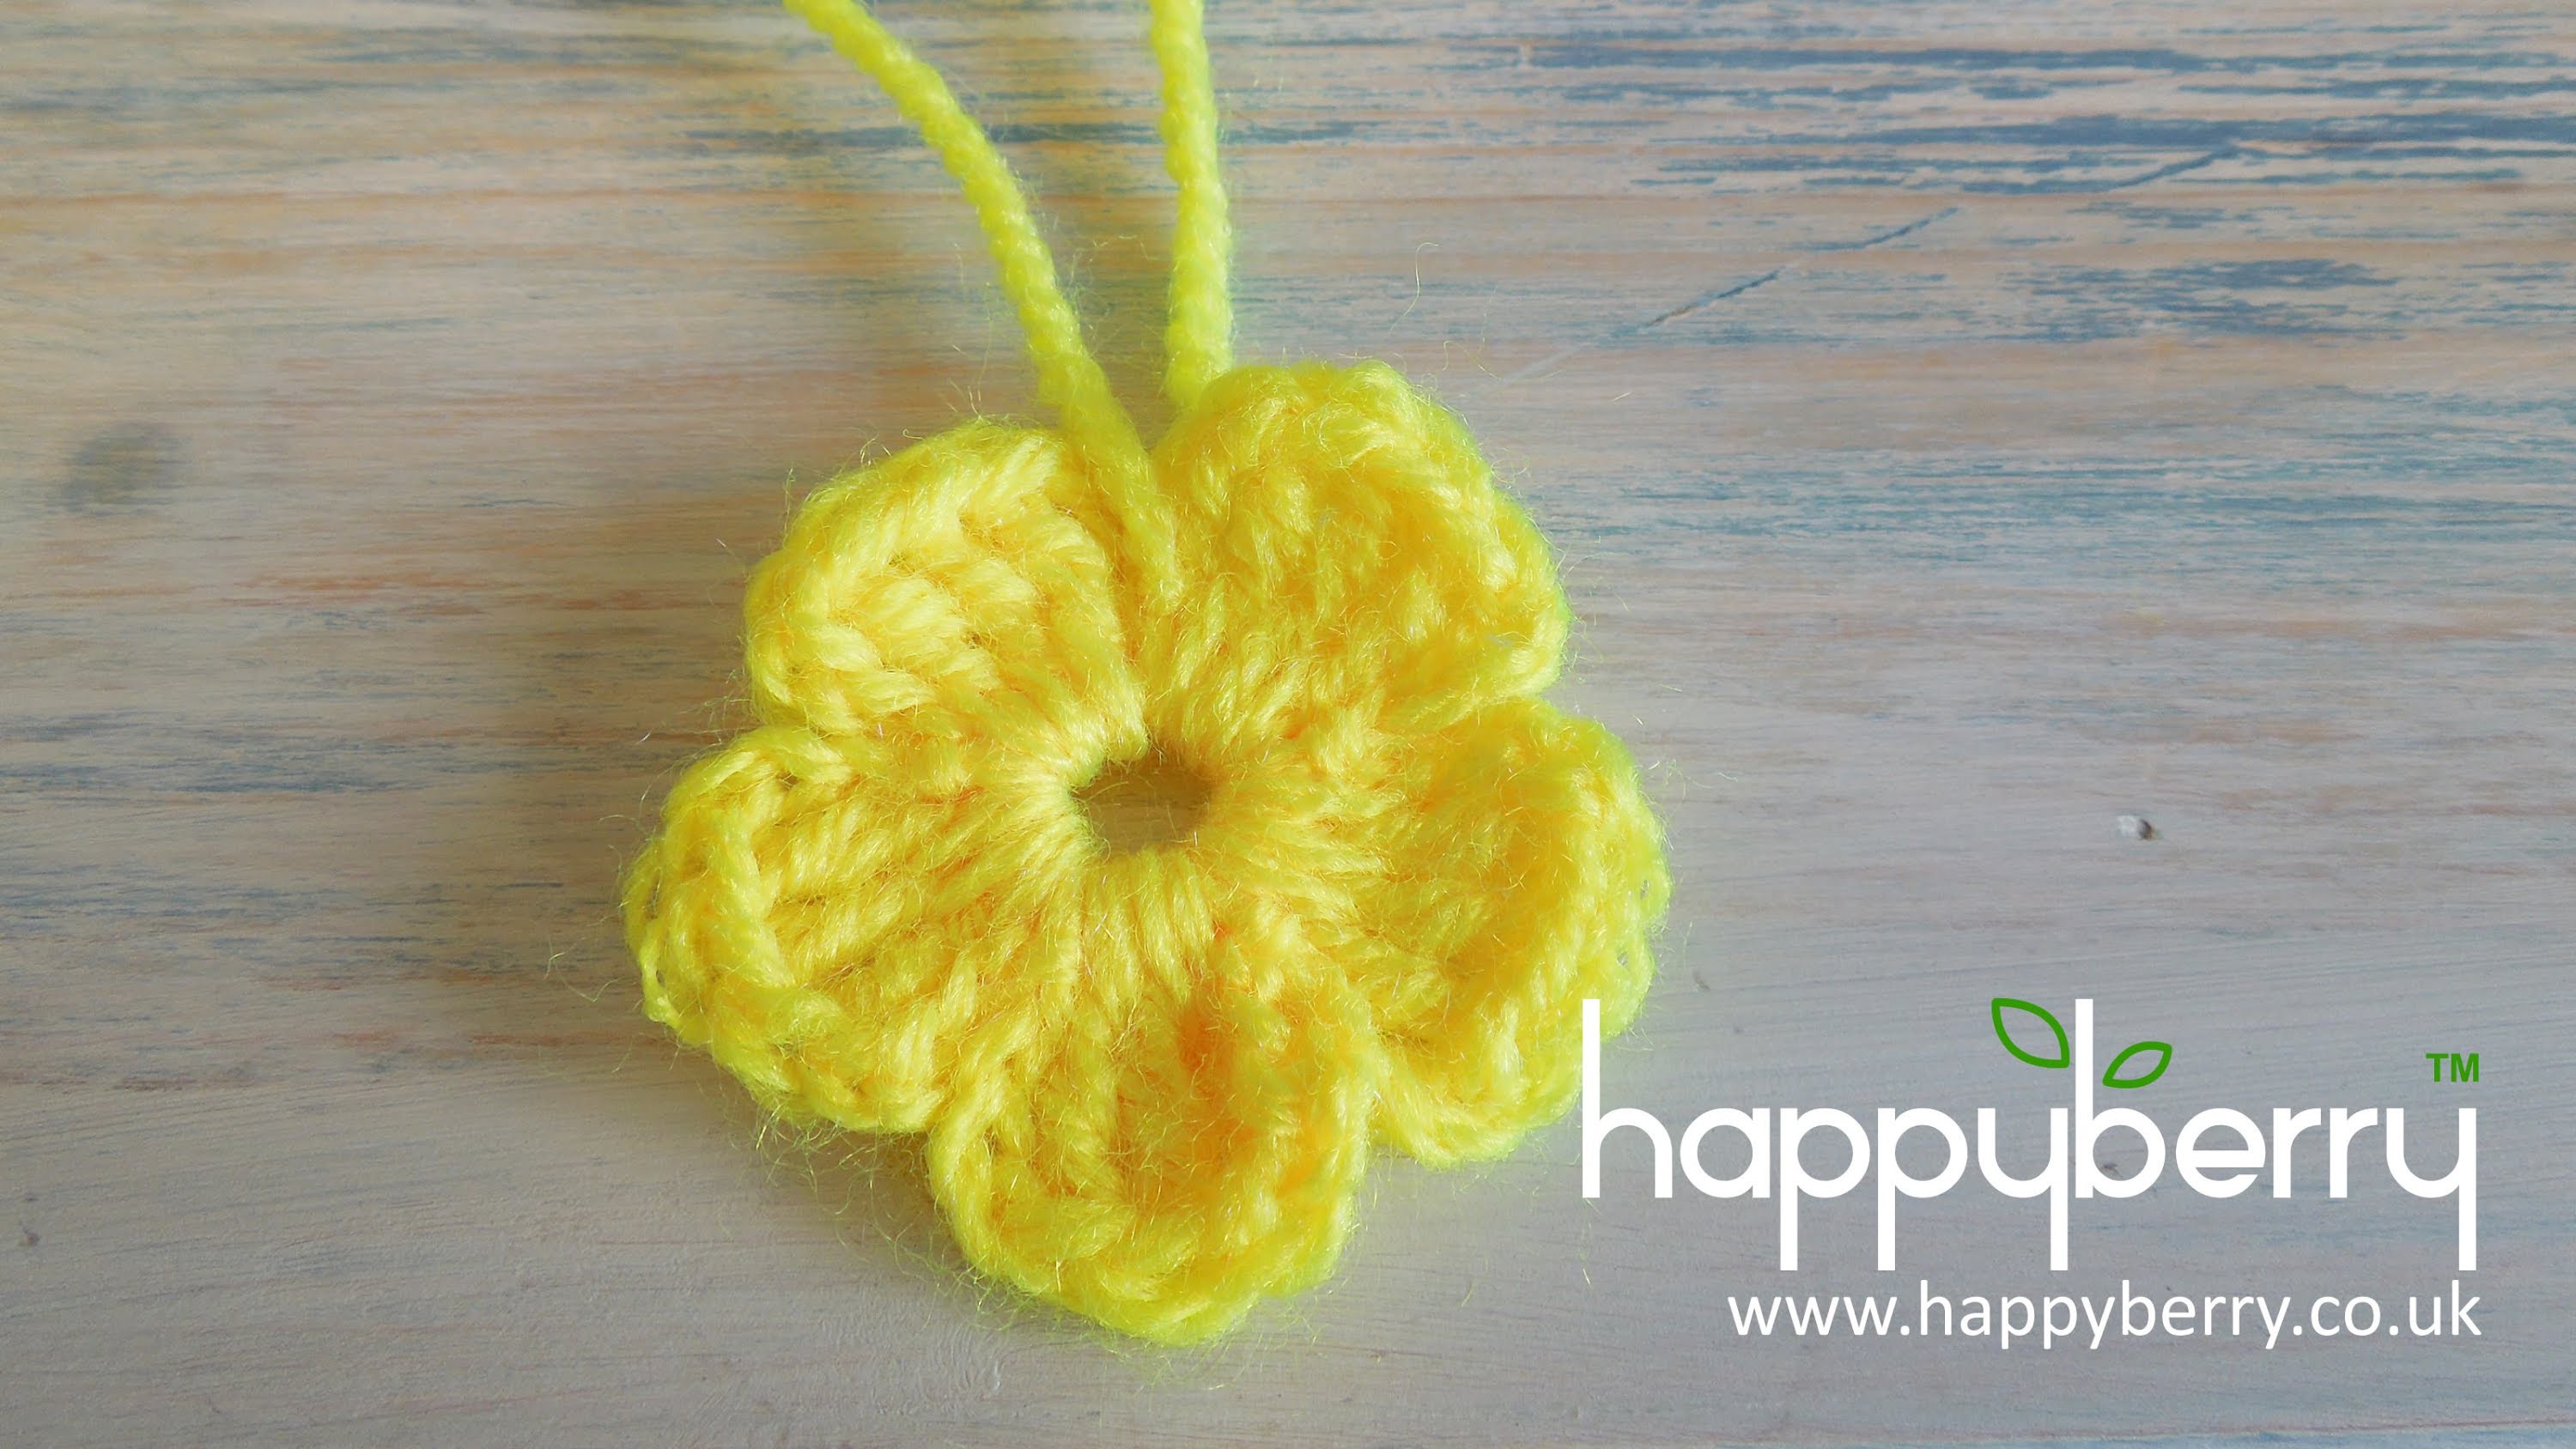 (crochet) How To - Crochet a Simple Flower version 2 - Absolute Beginners